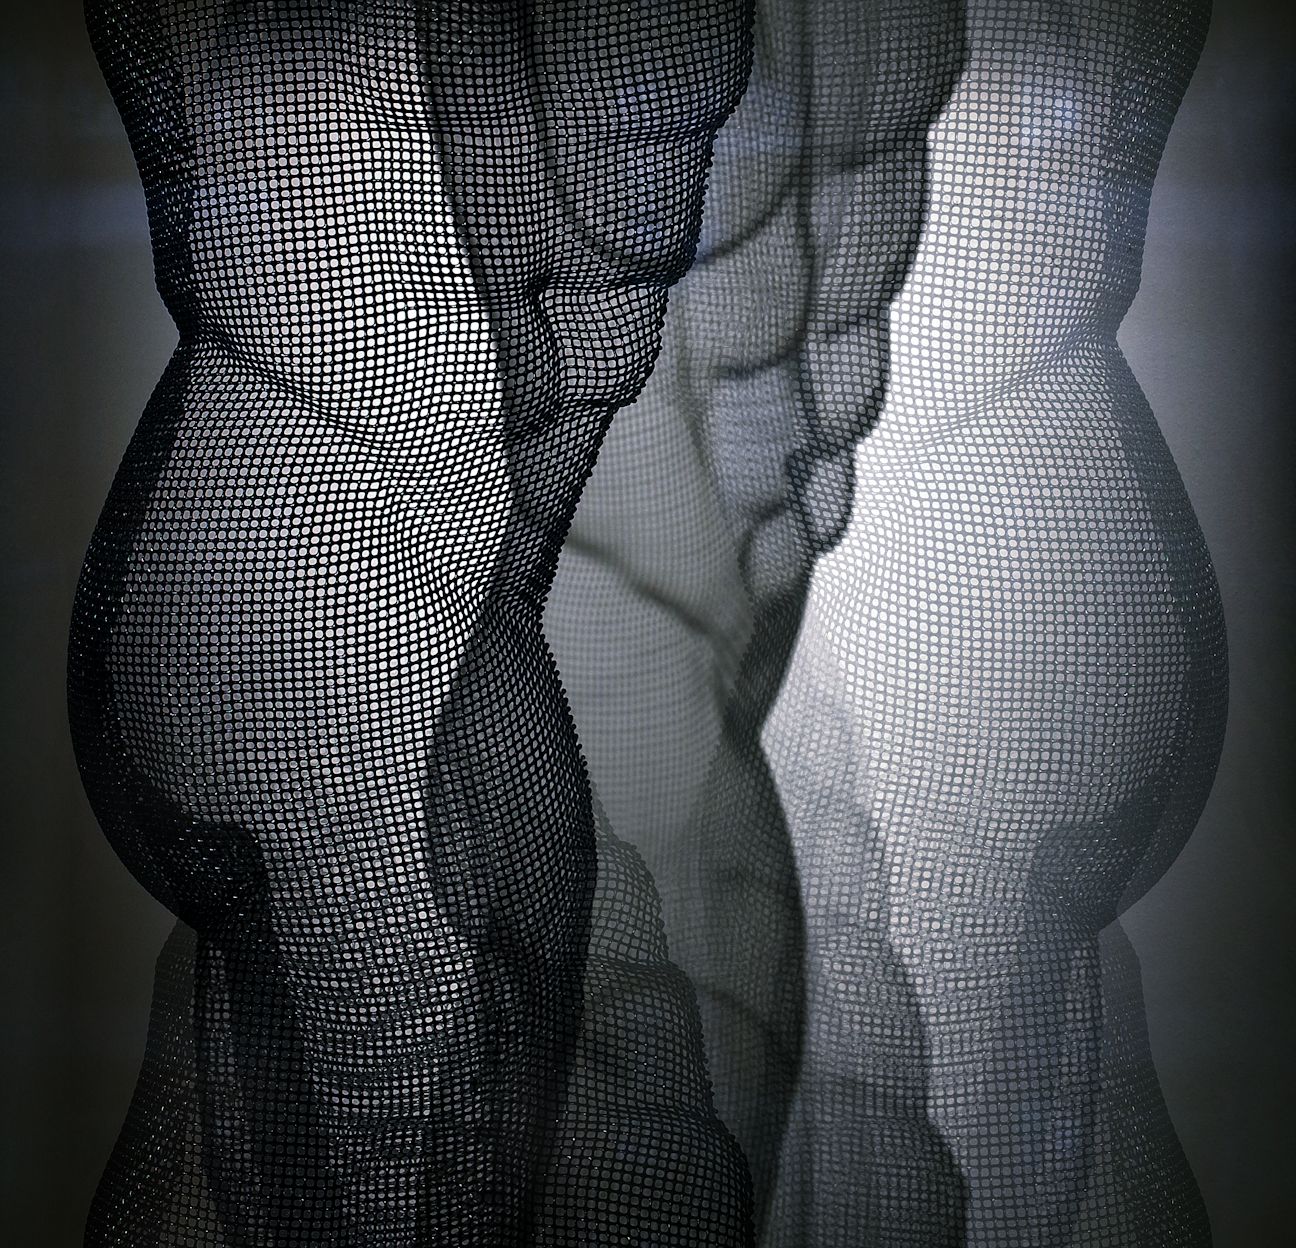 torso abstract